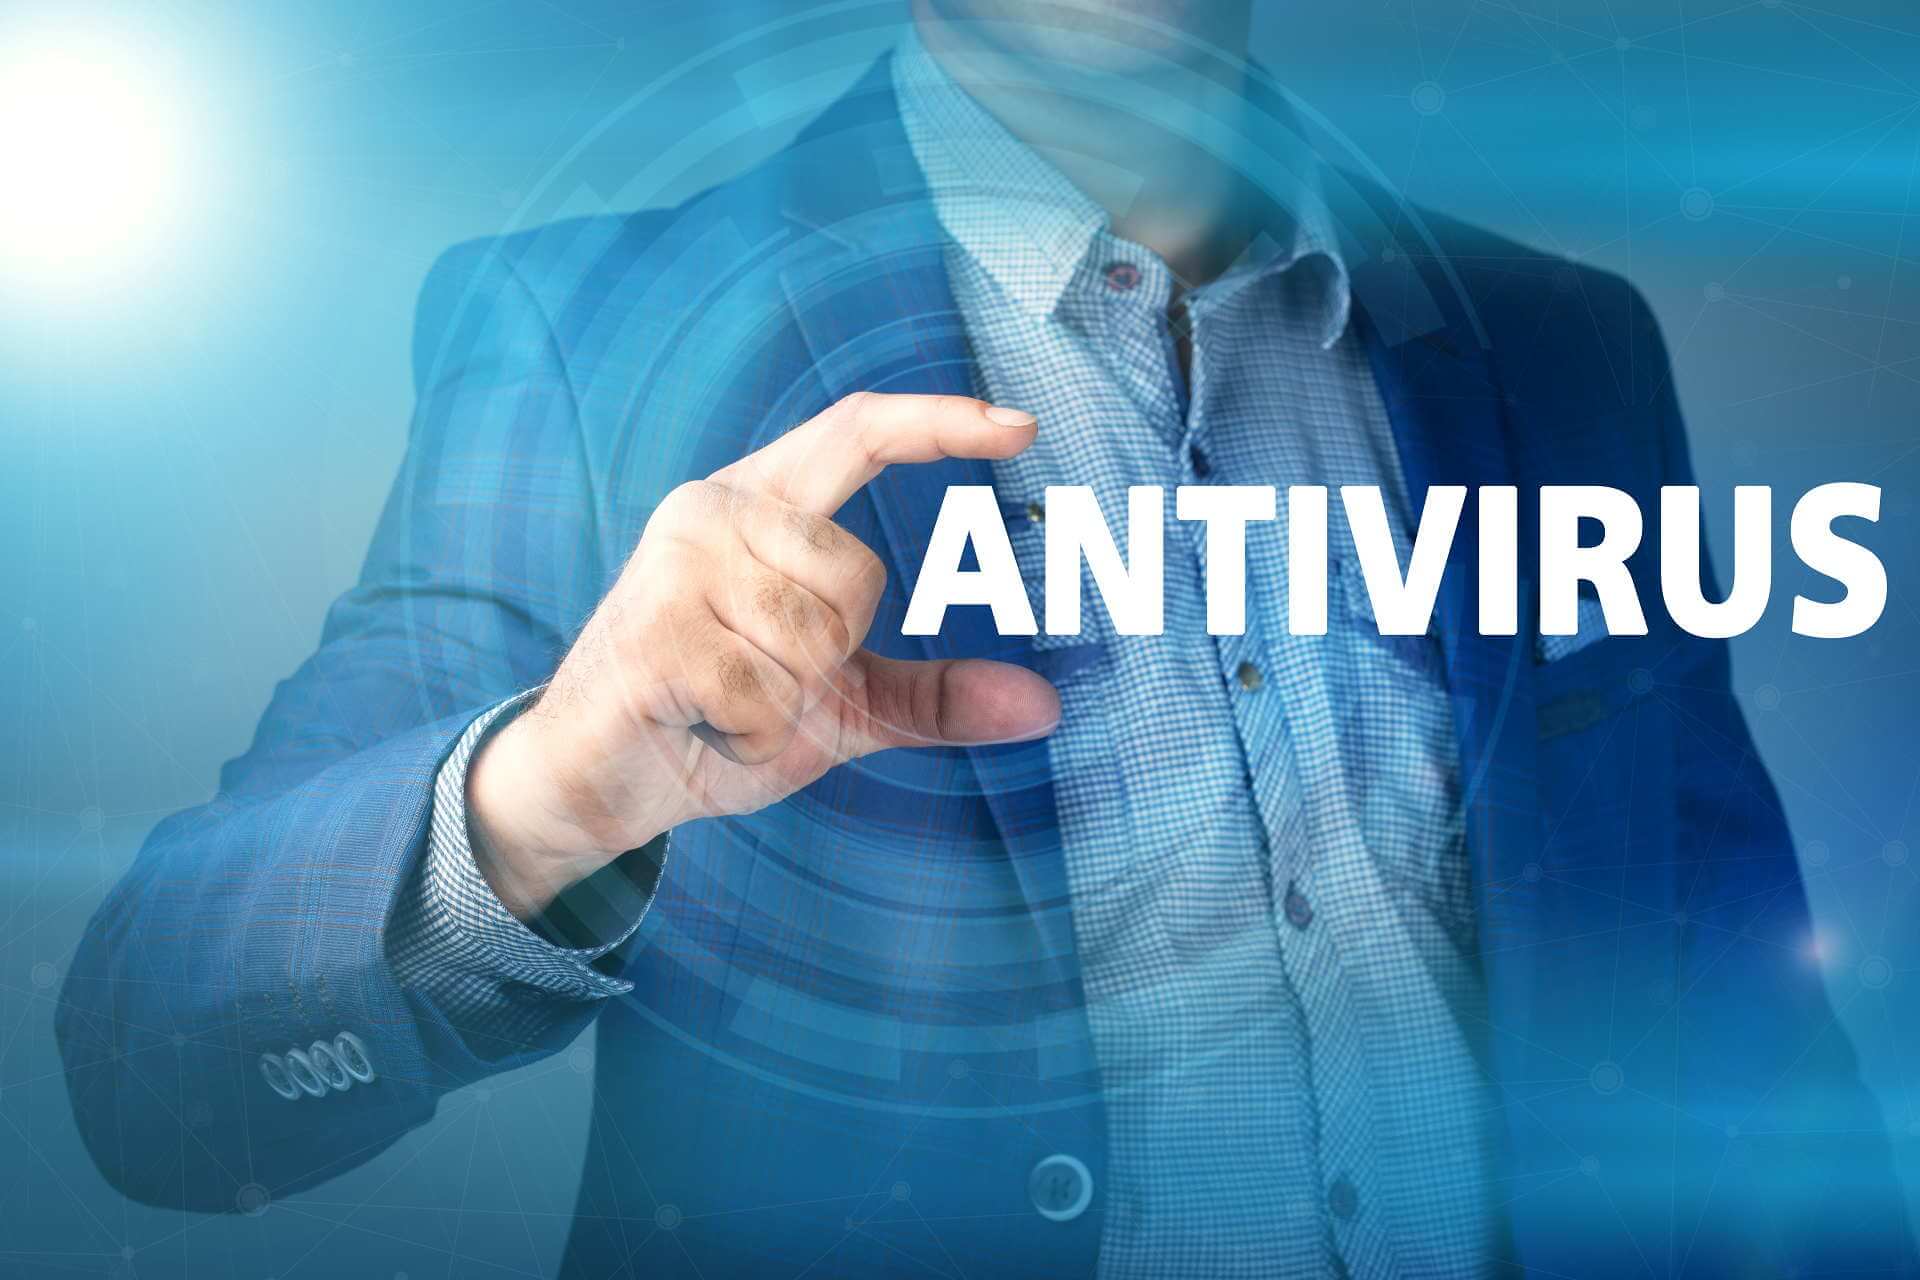 Enterprise antivirus to secure your business